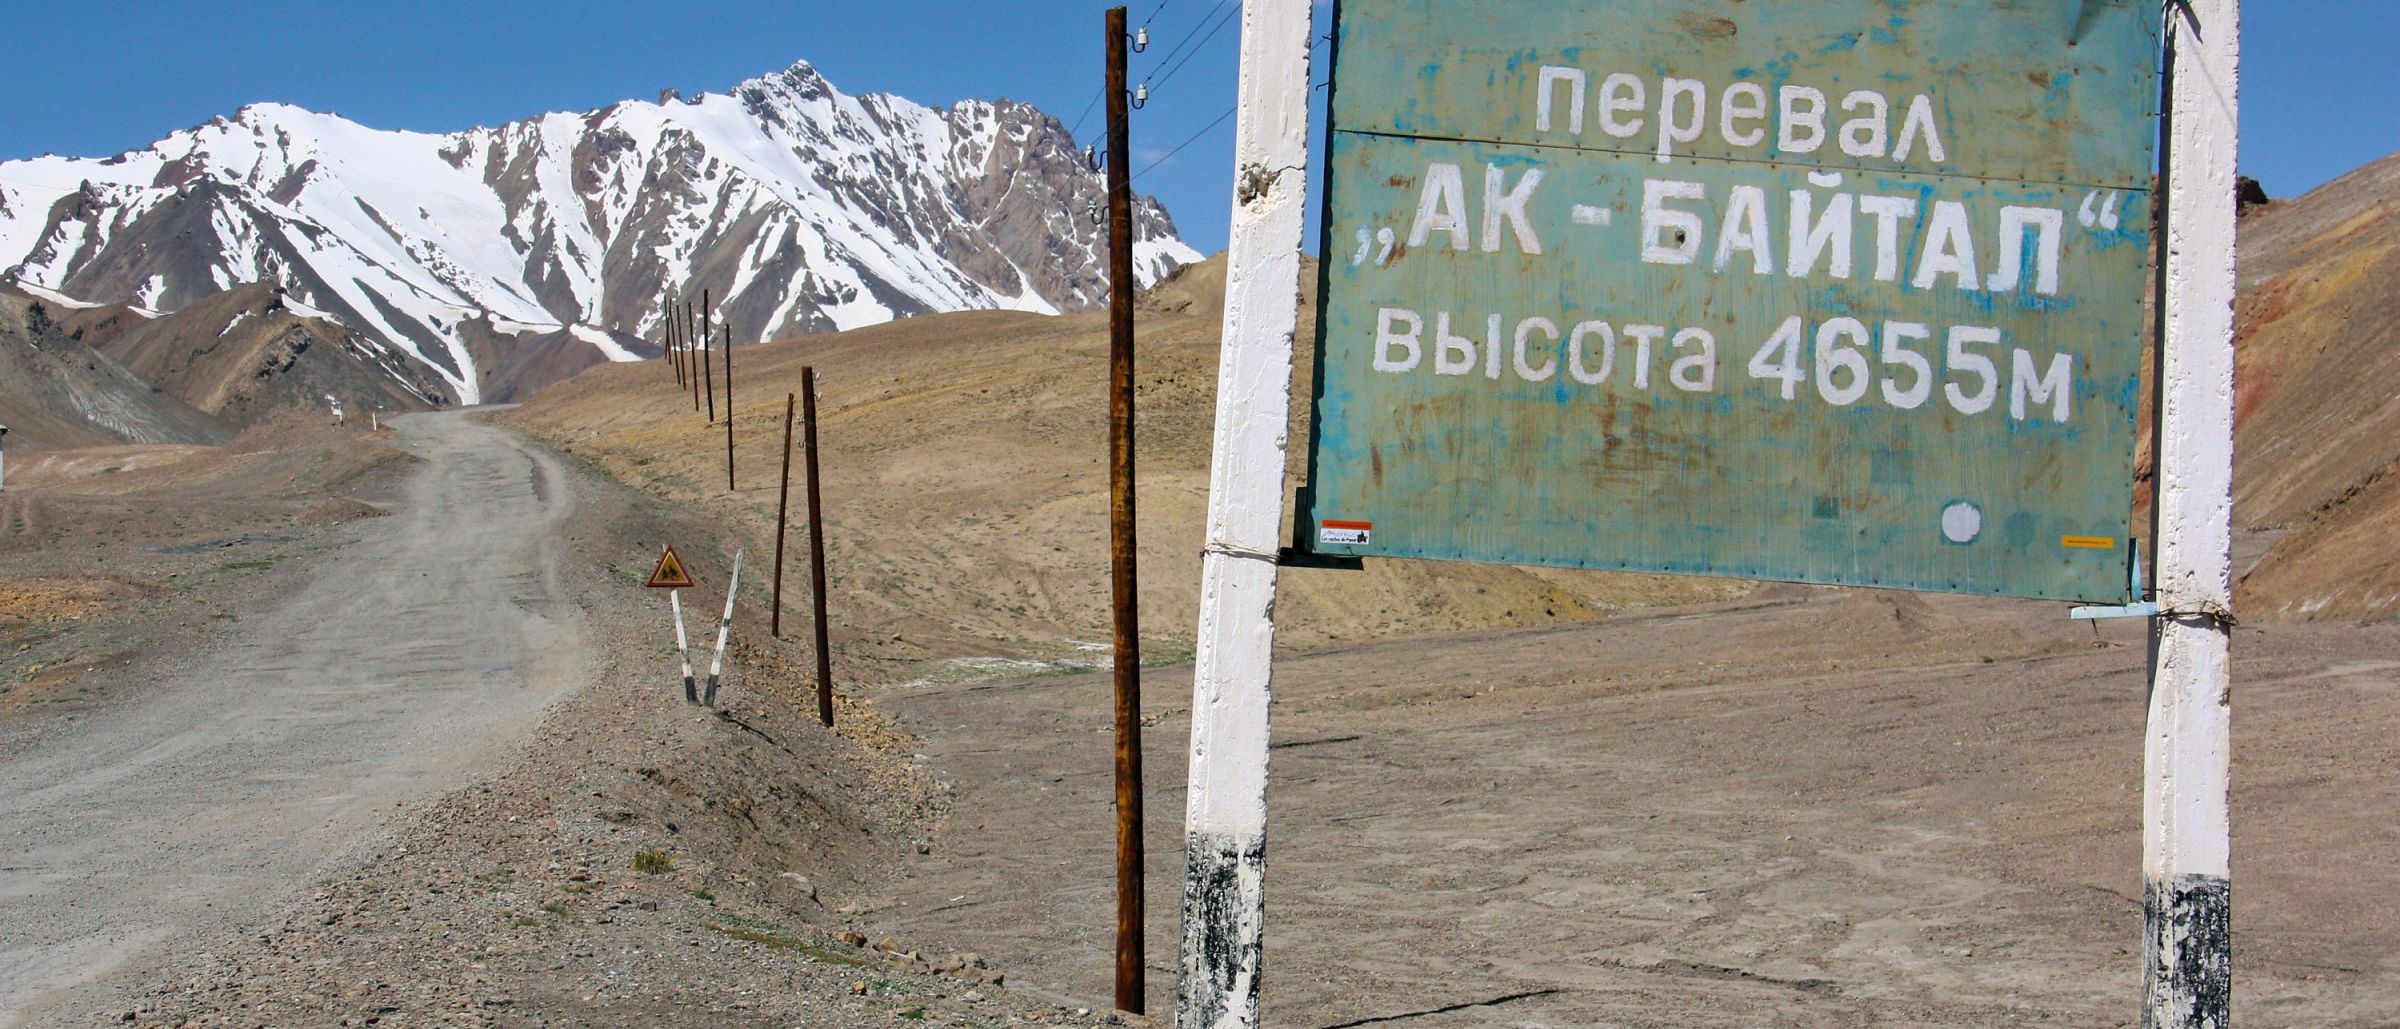 Akbaital-Pass (4655 m)